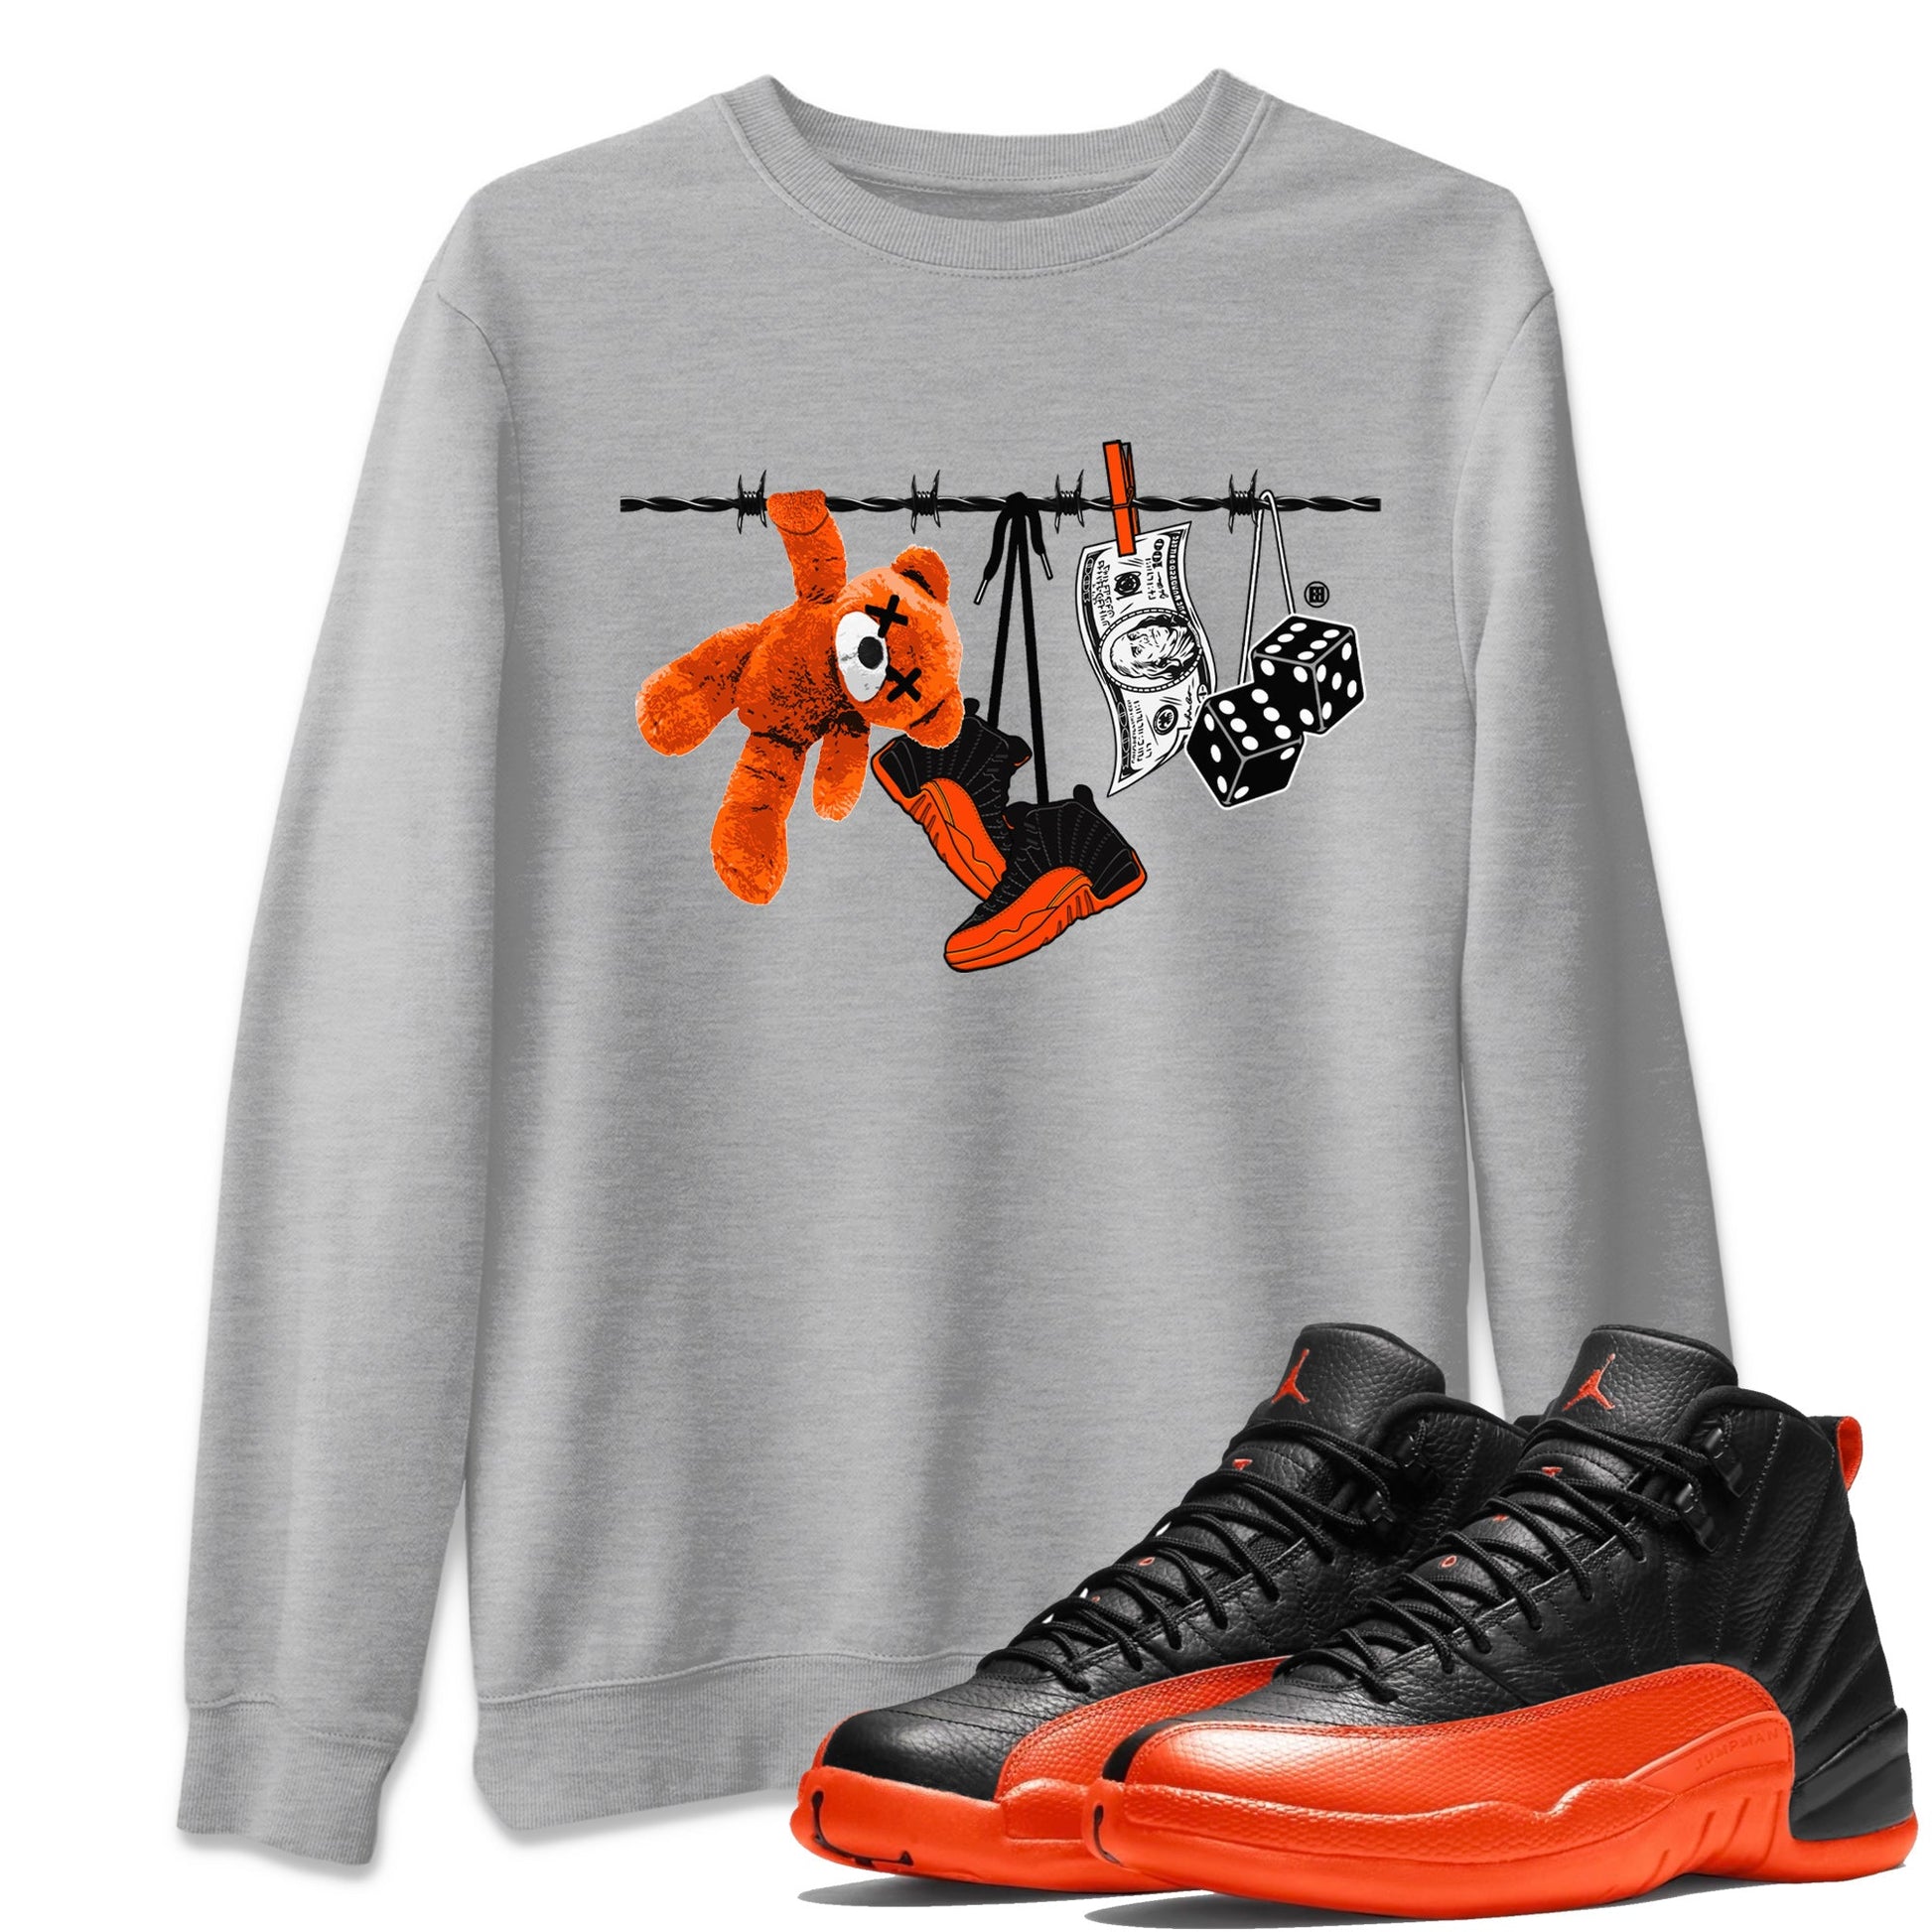 Air Jordan 12 Brilliant Orange Sneaker Match Tees Clothesline Sneaker Tees 12s Brilliant Orange Tee Unisex Shirts Heather Grey 1